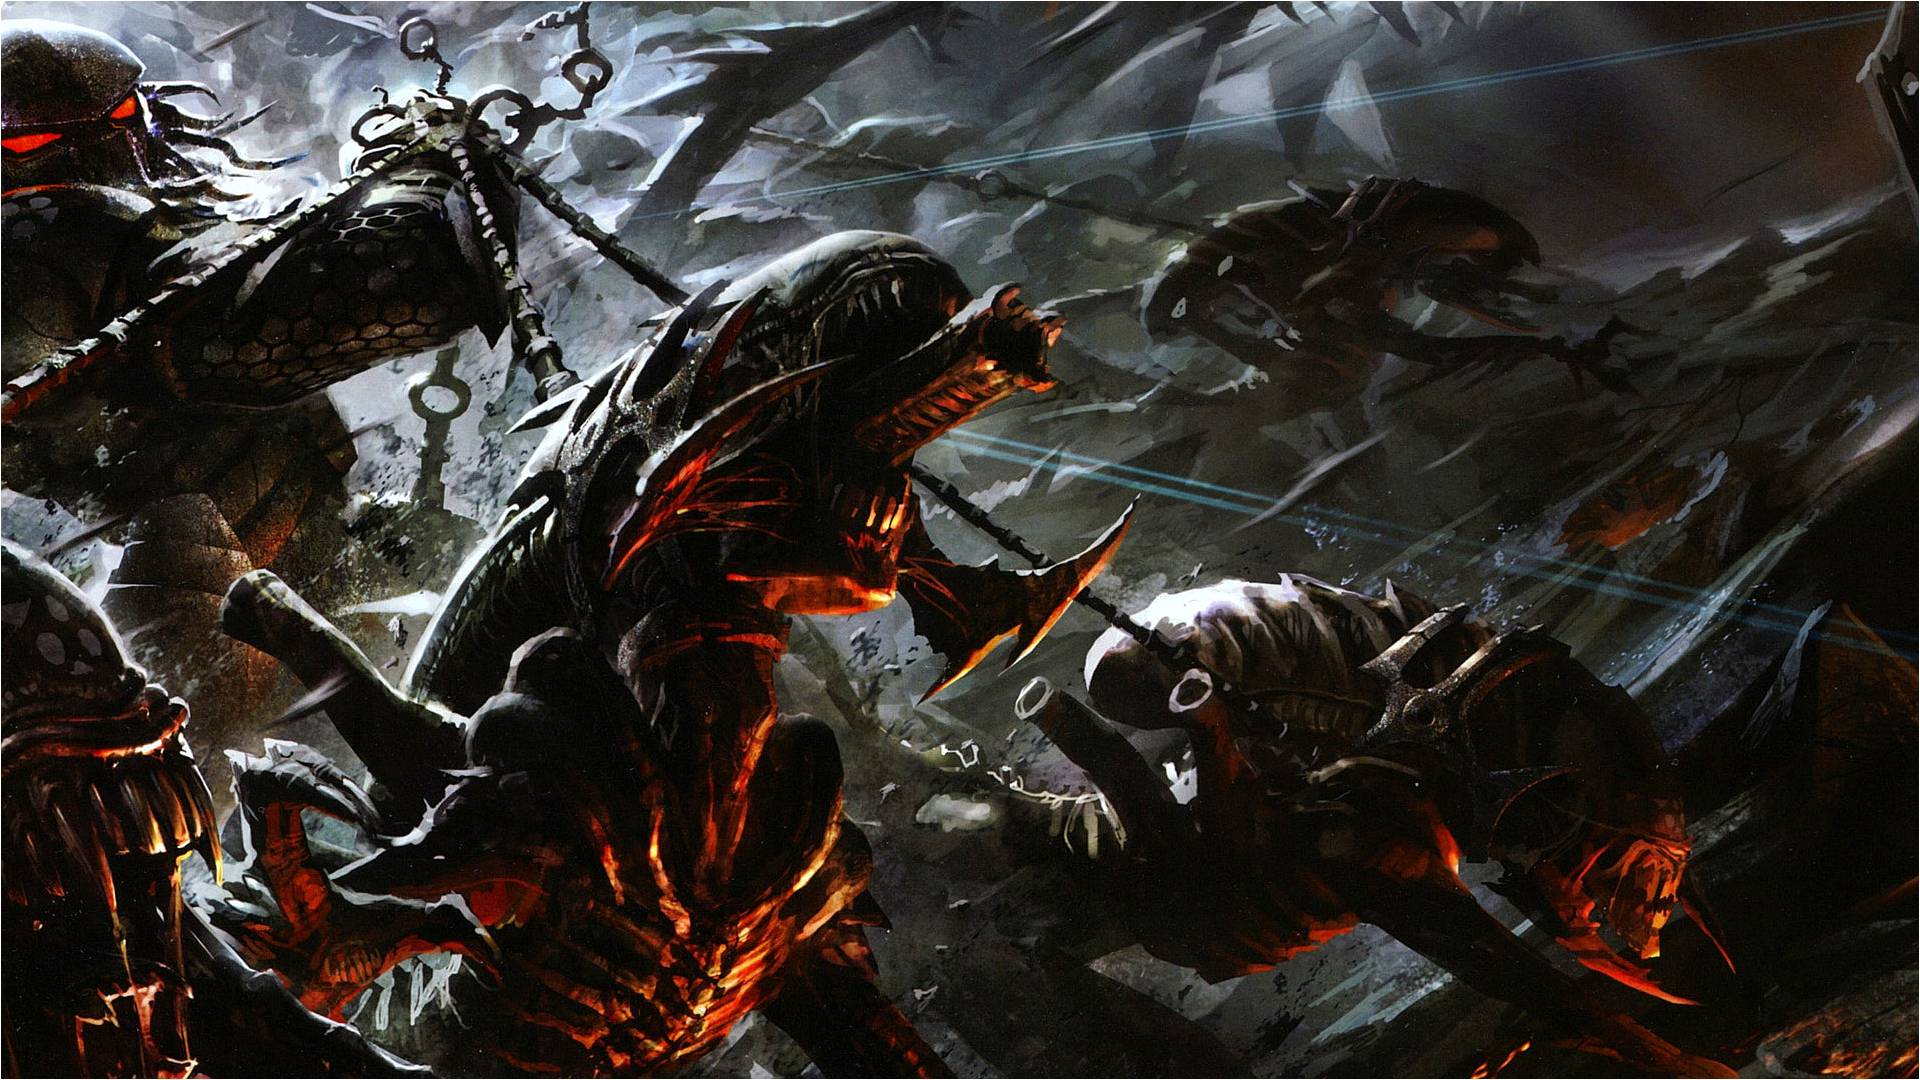 Alien Vs Predator Wallpaper